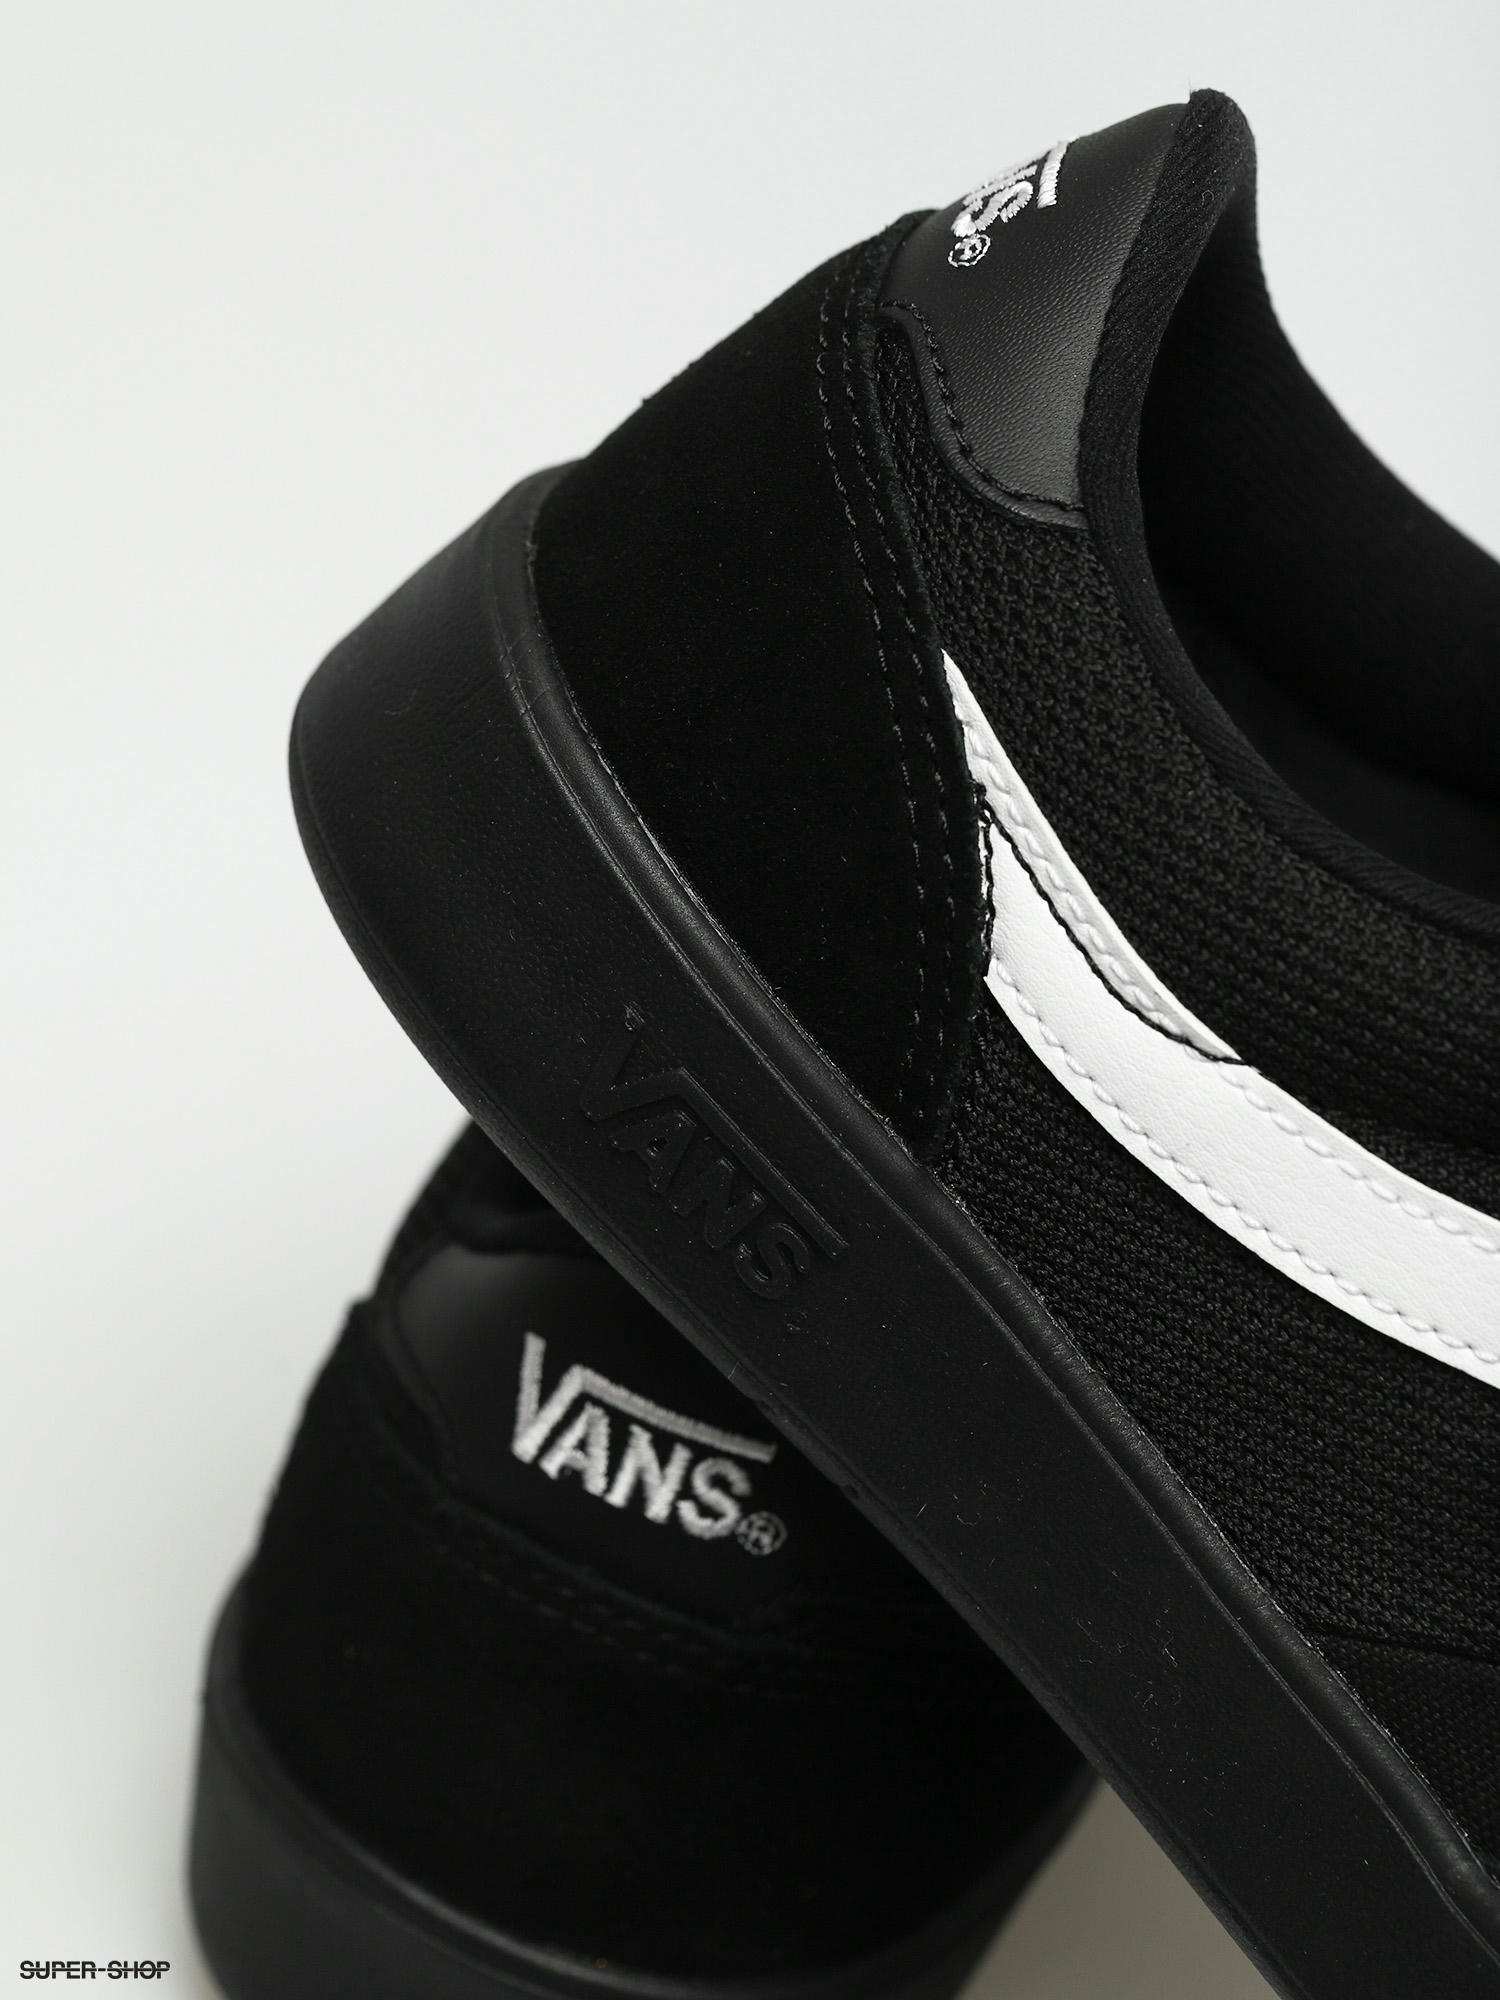 Vans Cruze Too CC Shoes (staple/black/black)